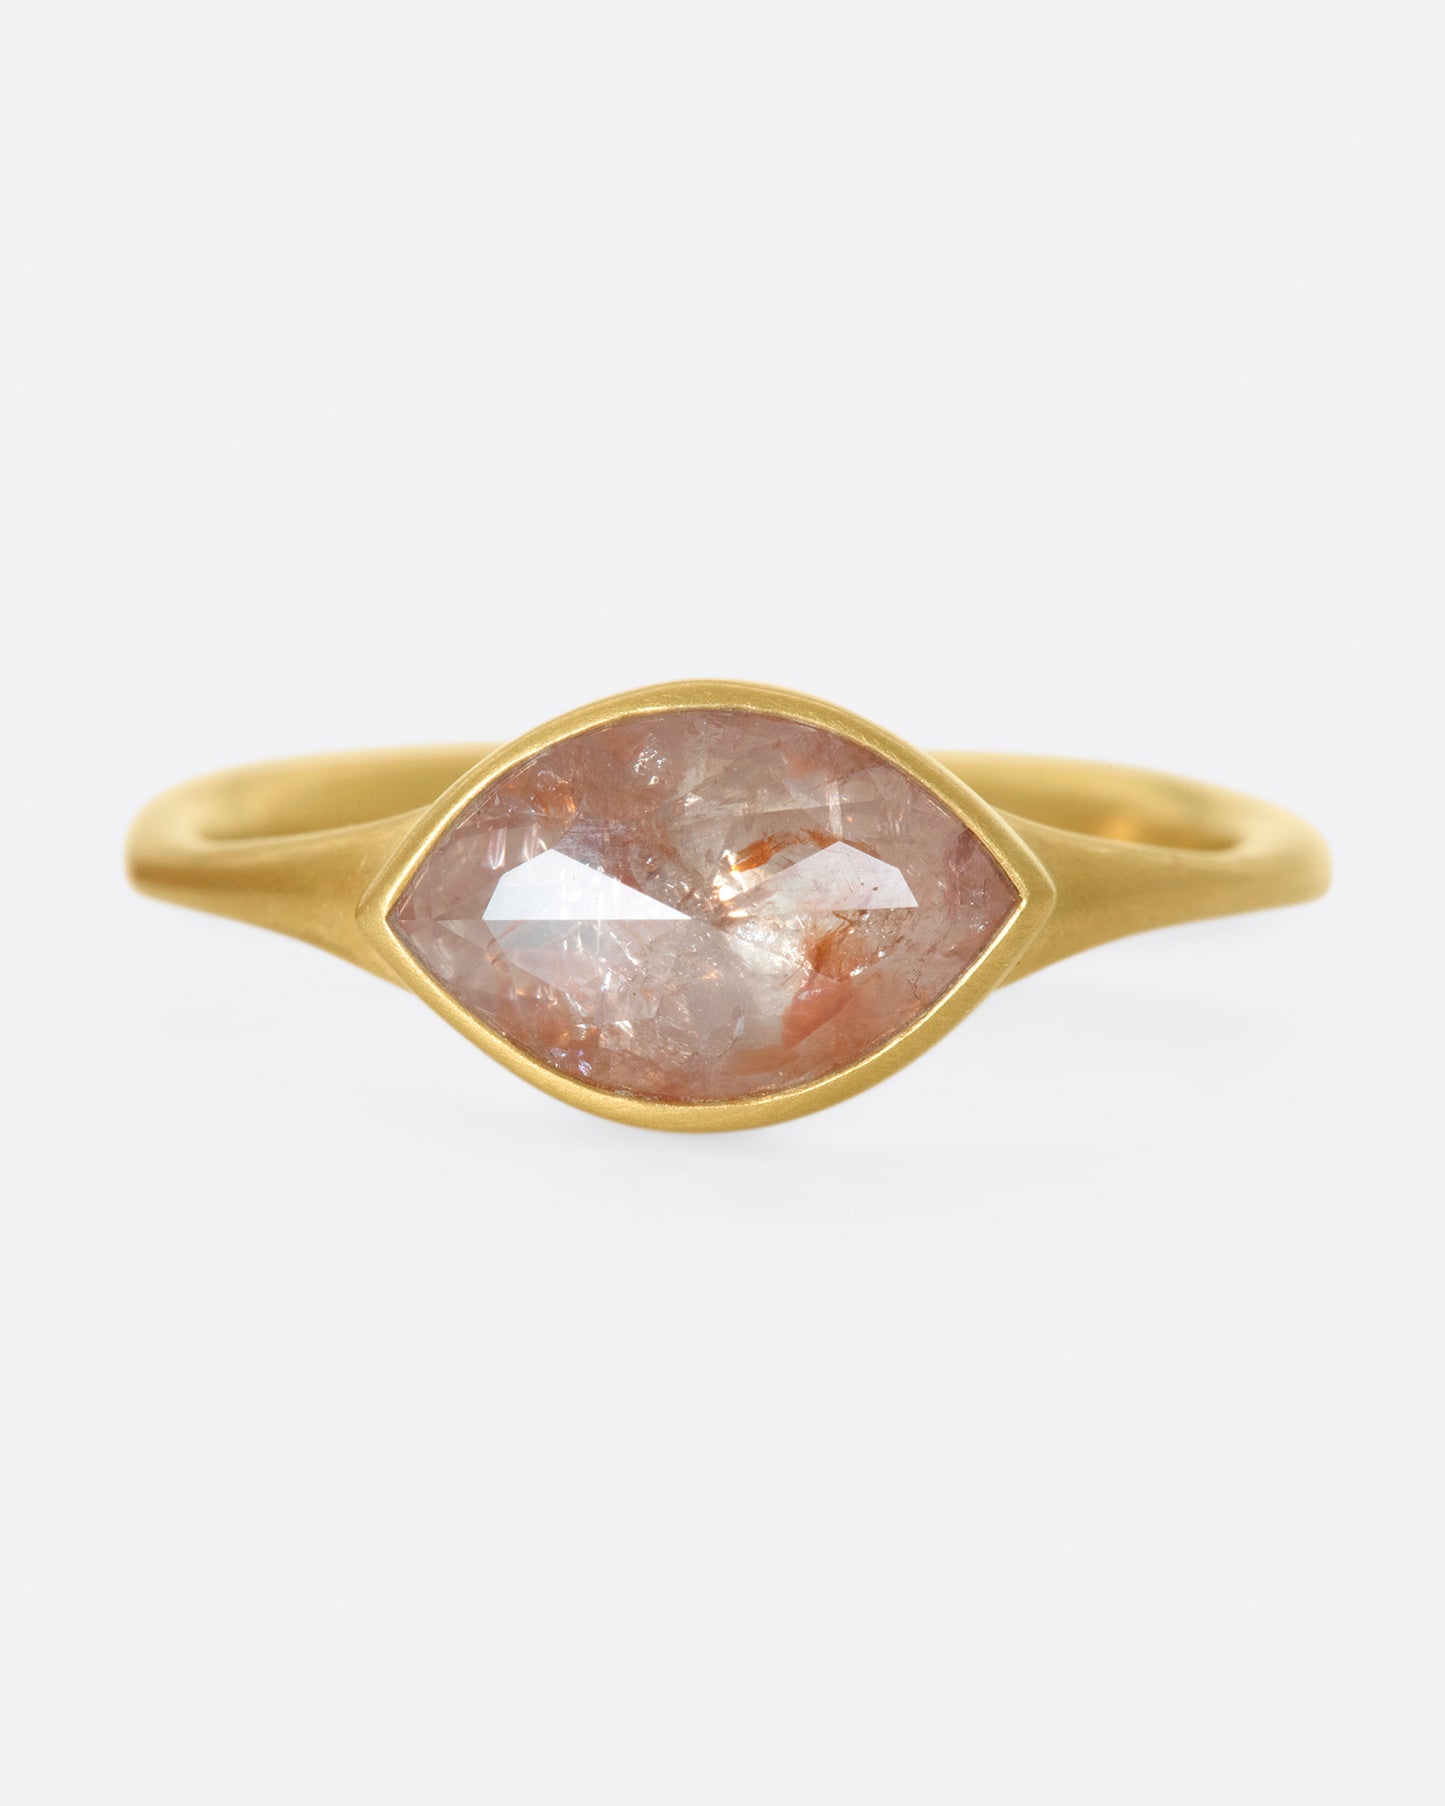 An east-west, navette shaped diamond set in one of Lola Brooks' signature bezel settings